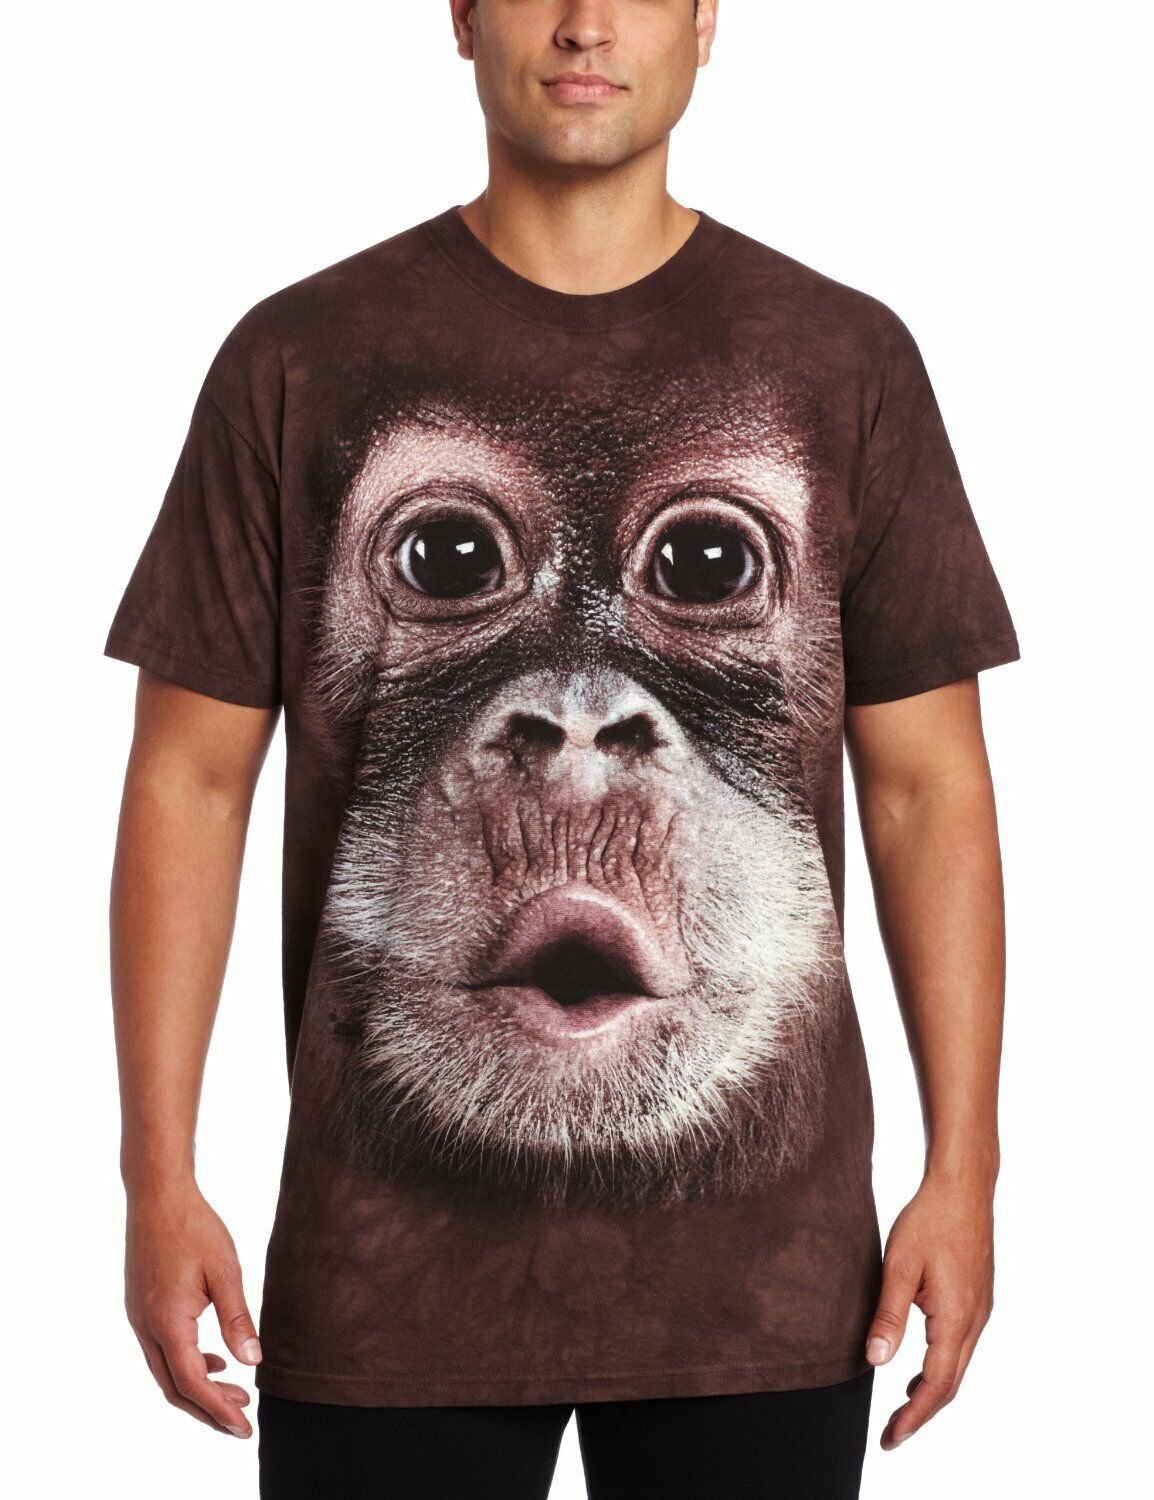 The Mountain Graphic Tee Big Face Baby Orangutan Adult T-shirt Size 2XL